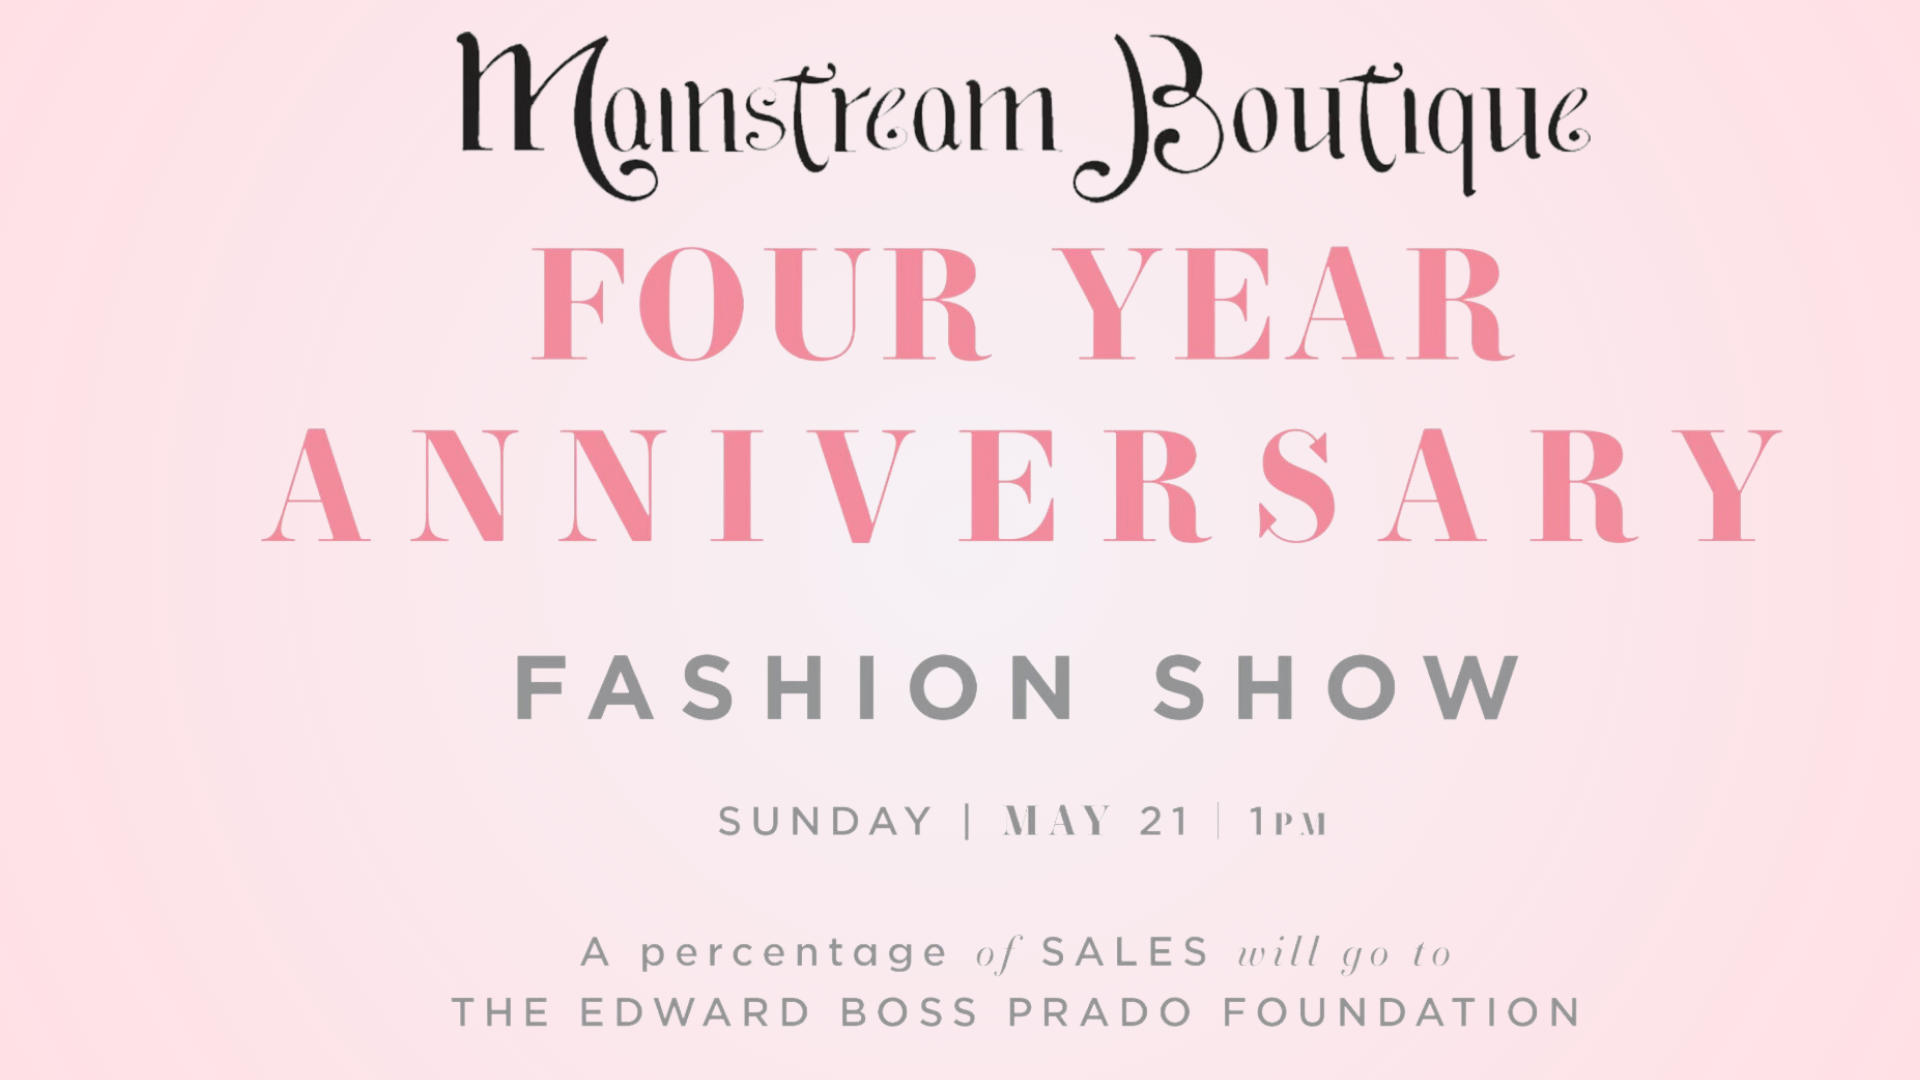 Mainstream Boutique Fashion 4 Year Show